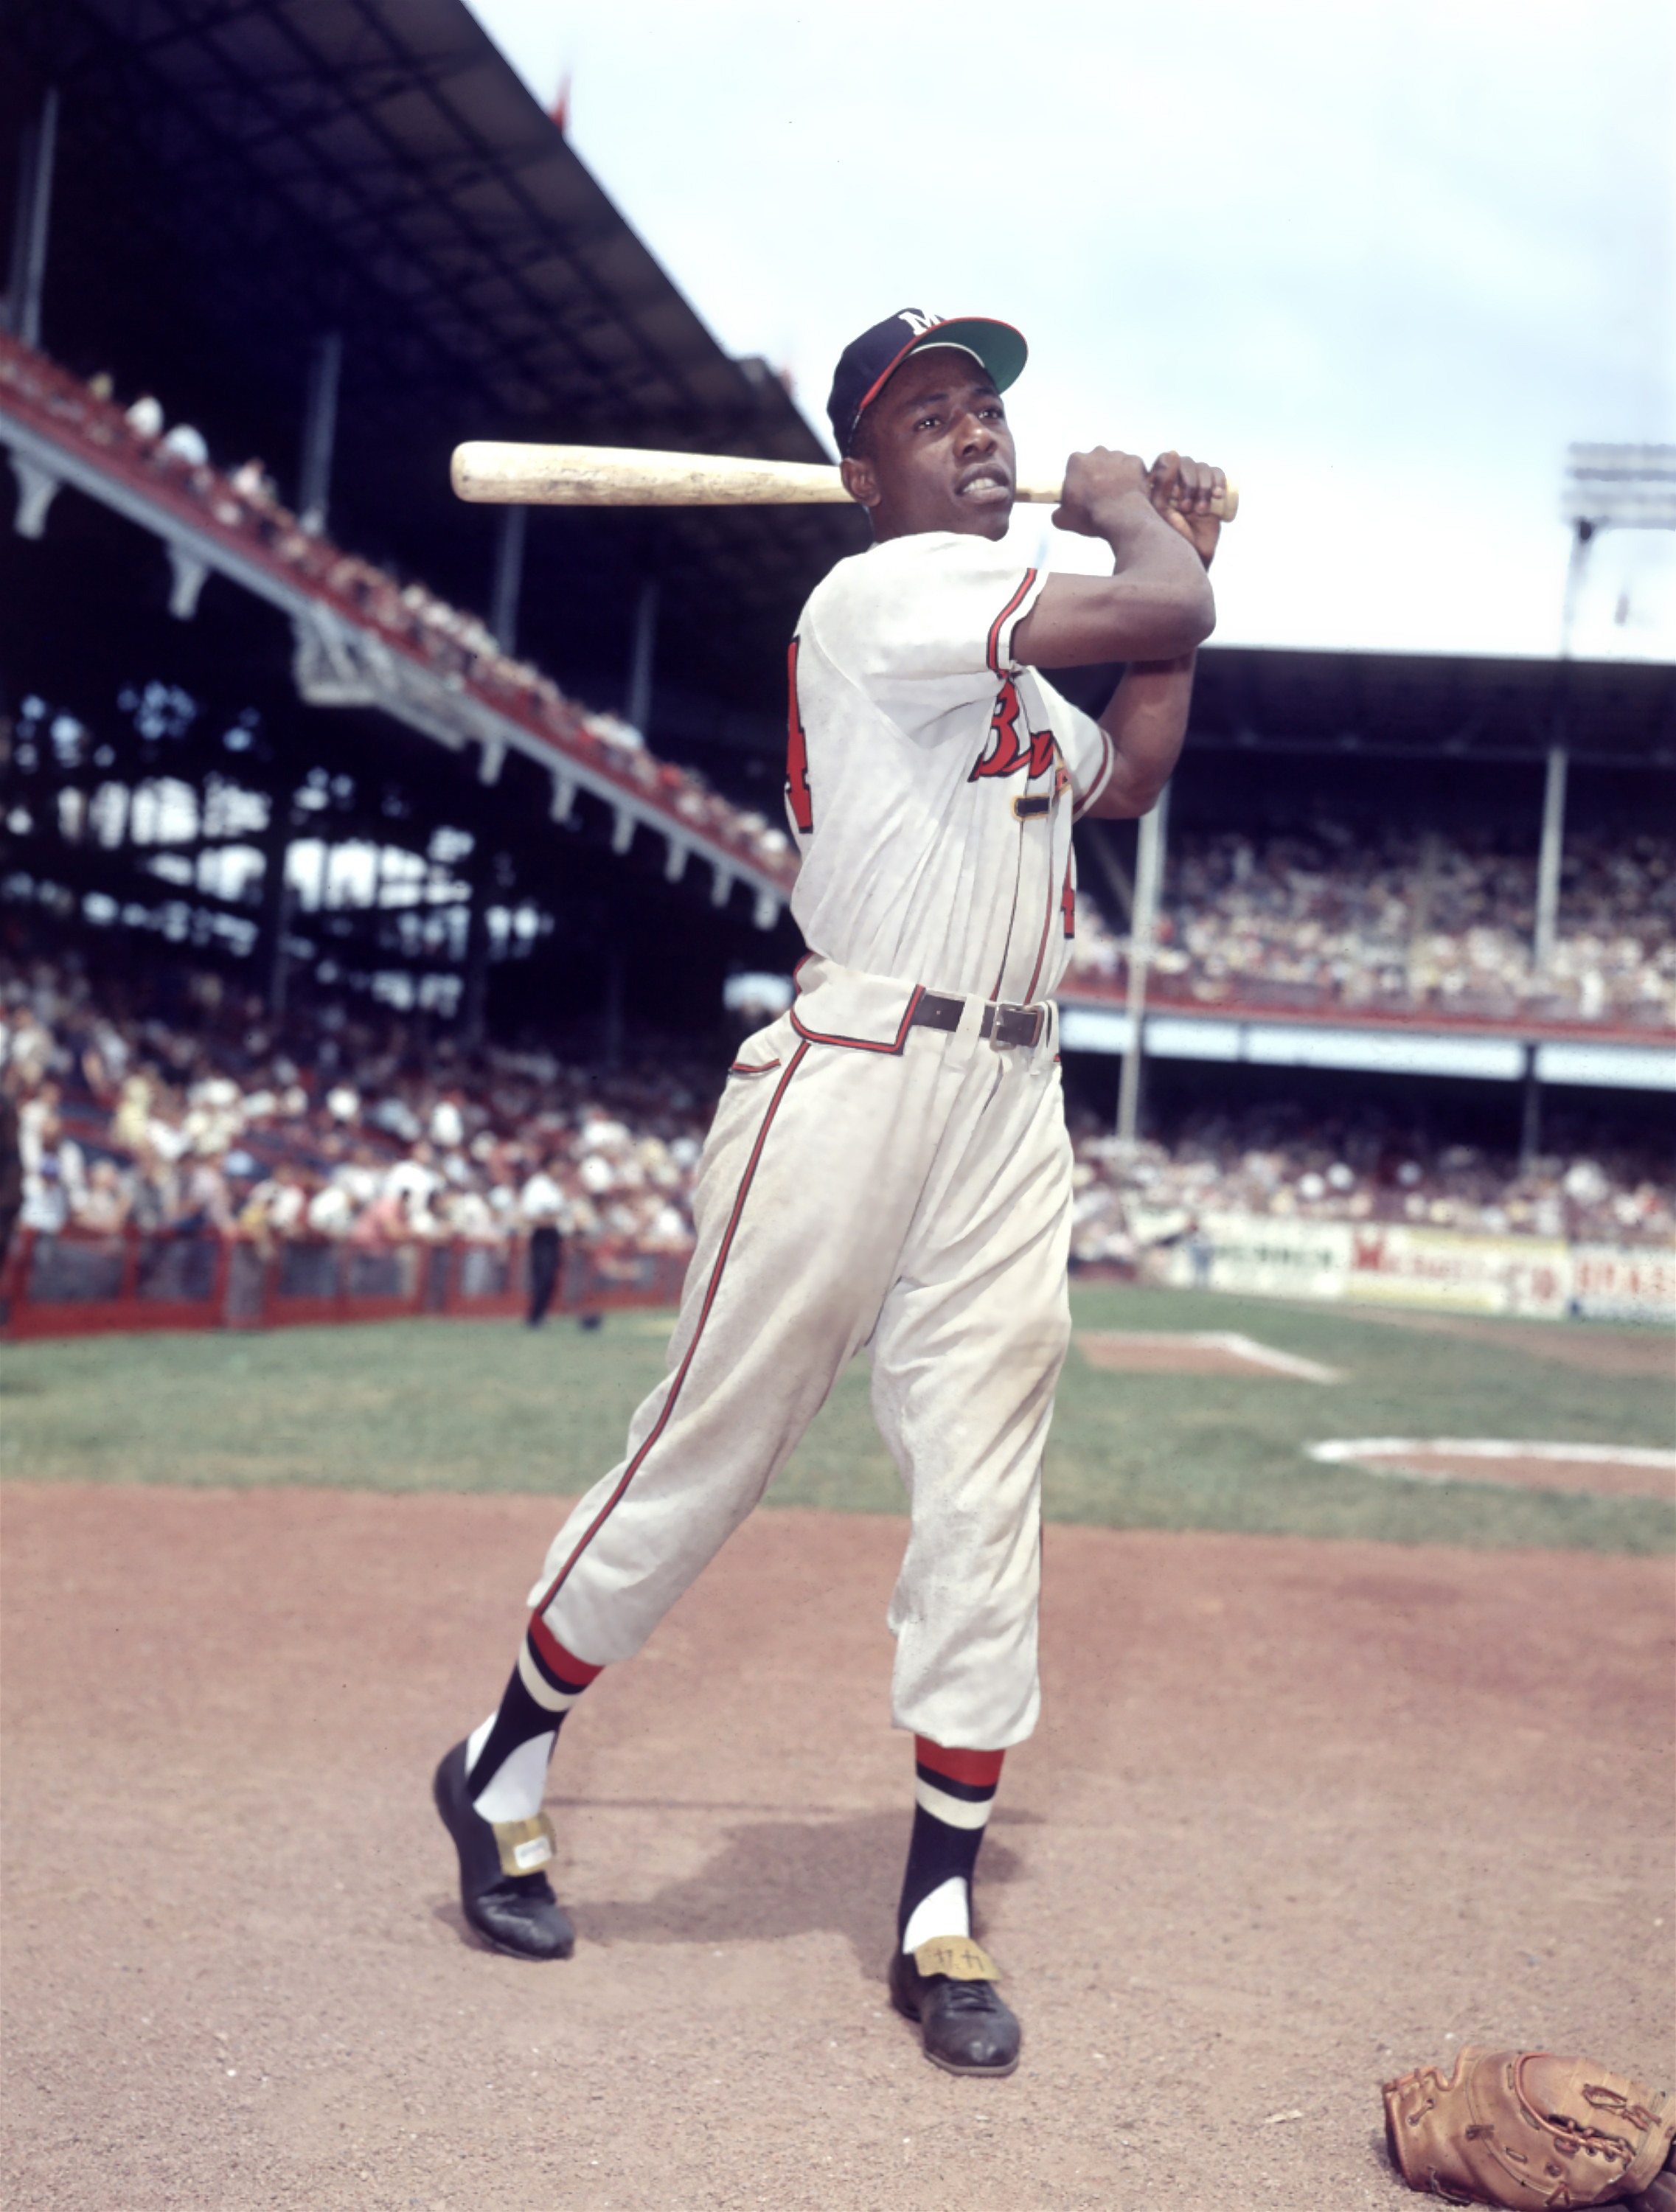 Hank Aaron, Biography, Baseball, & Facts